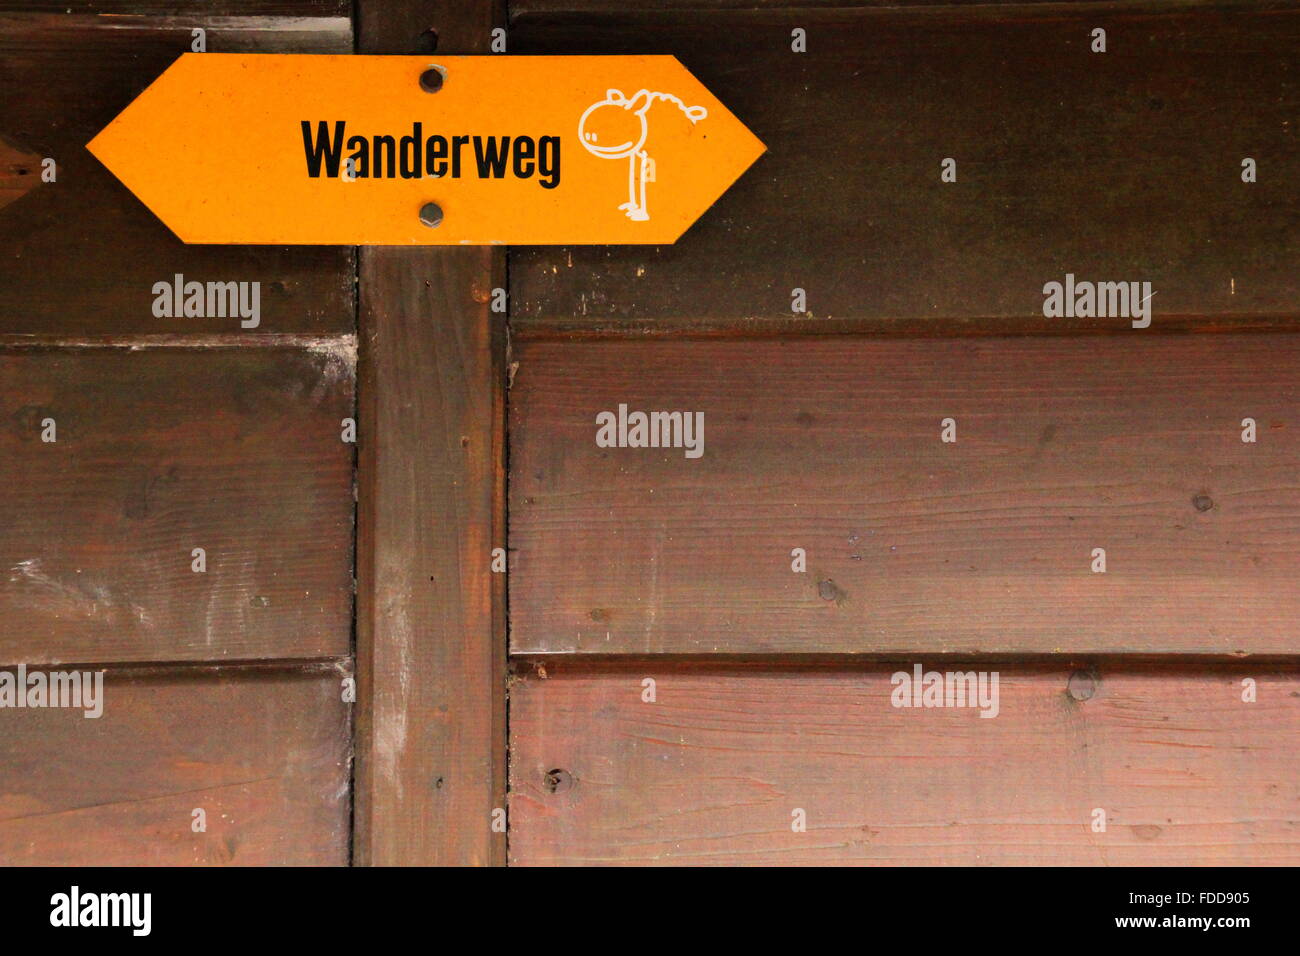 wanderweg (german) written on a yellow direction sign Stock Photo